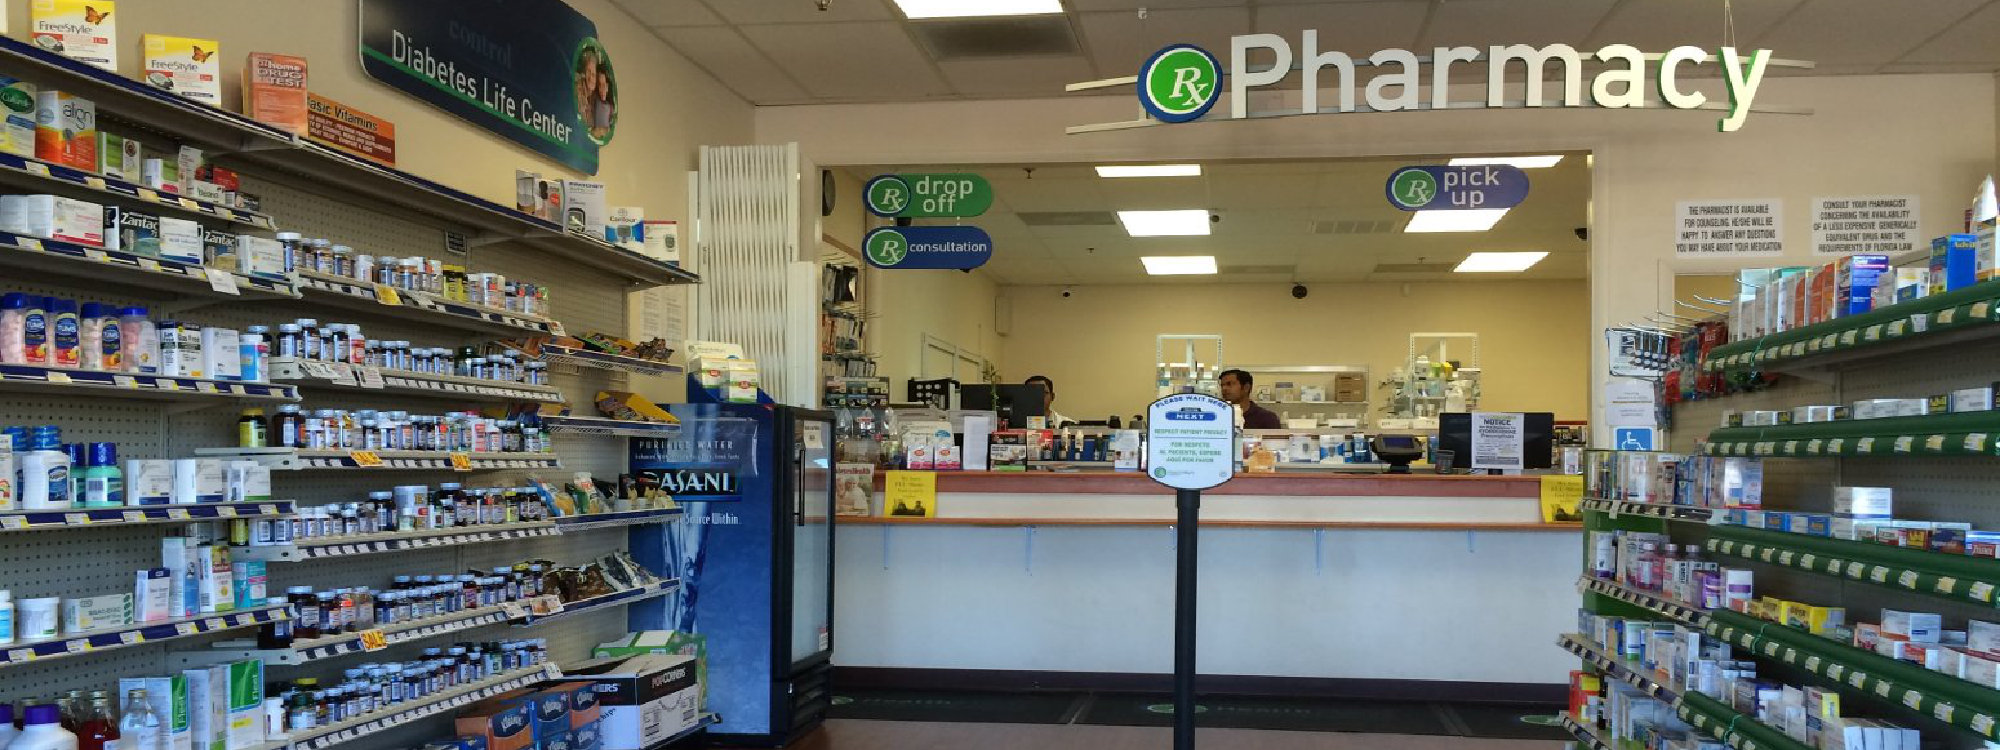 counter of the ricker pharmacy